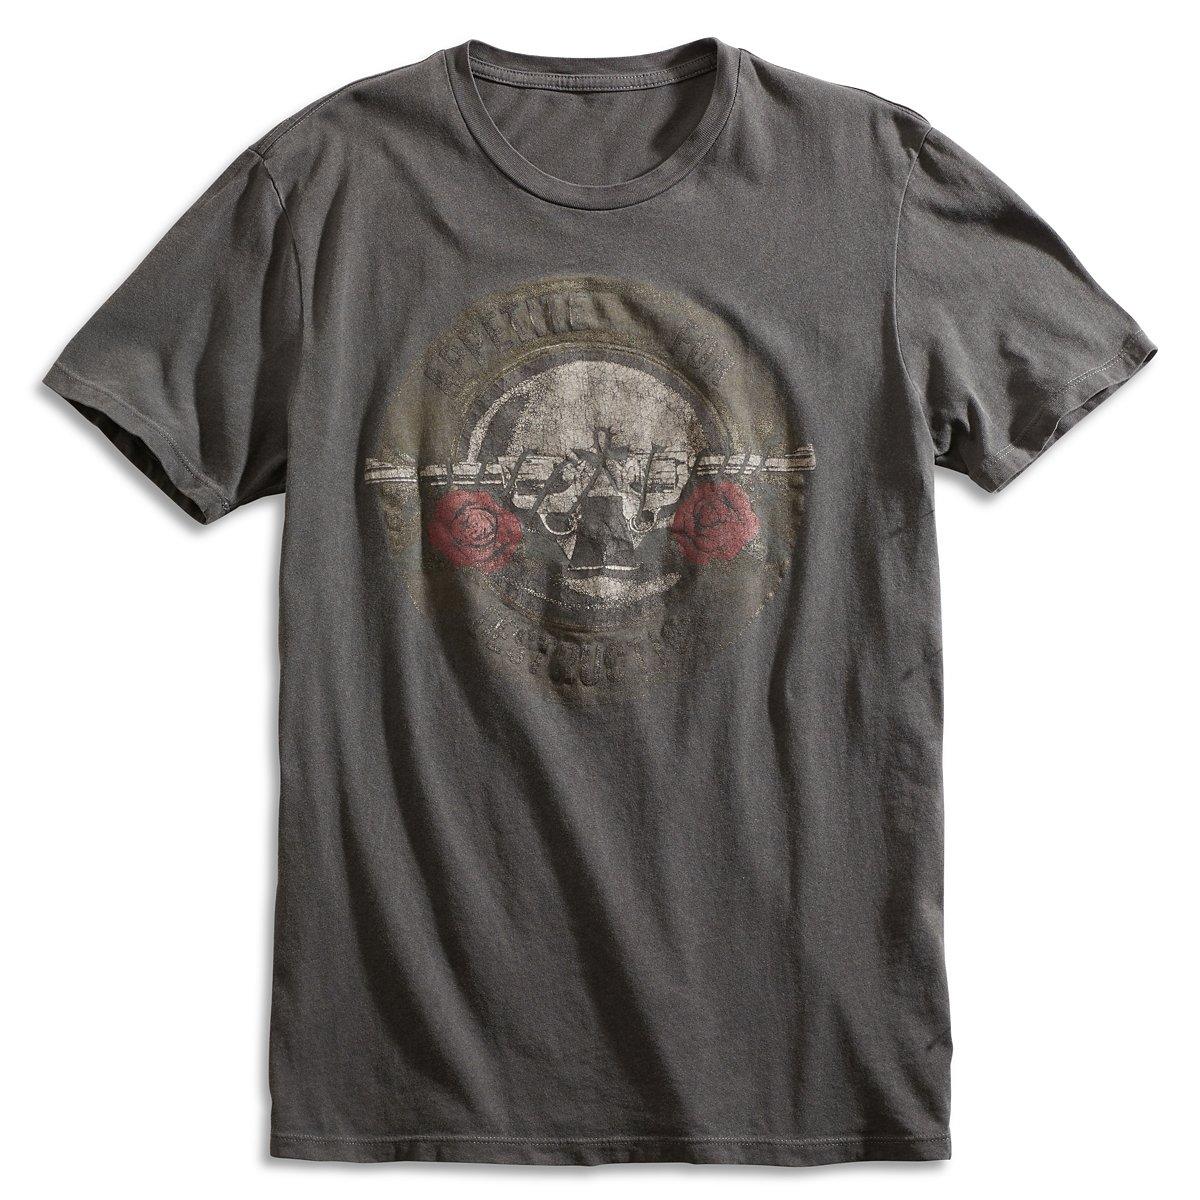 Lucky Brand Guns N' Roses T-shirts for Women